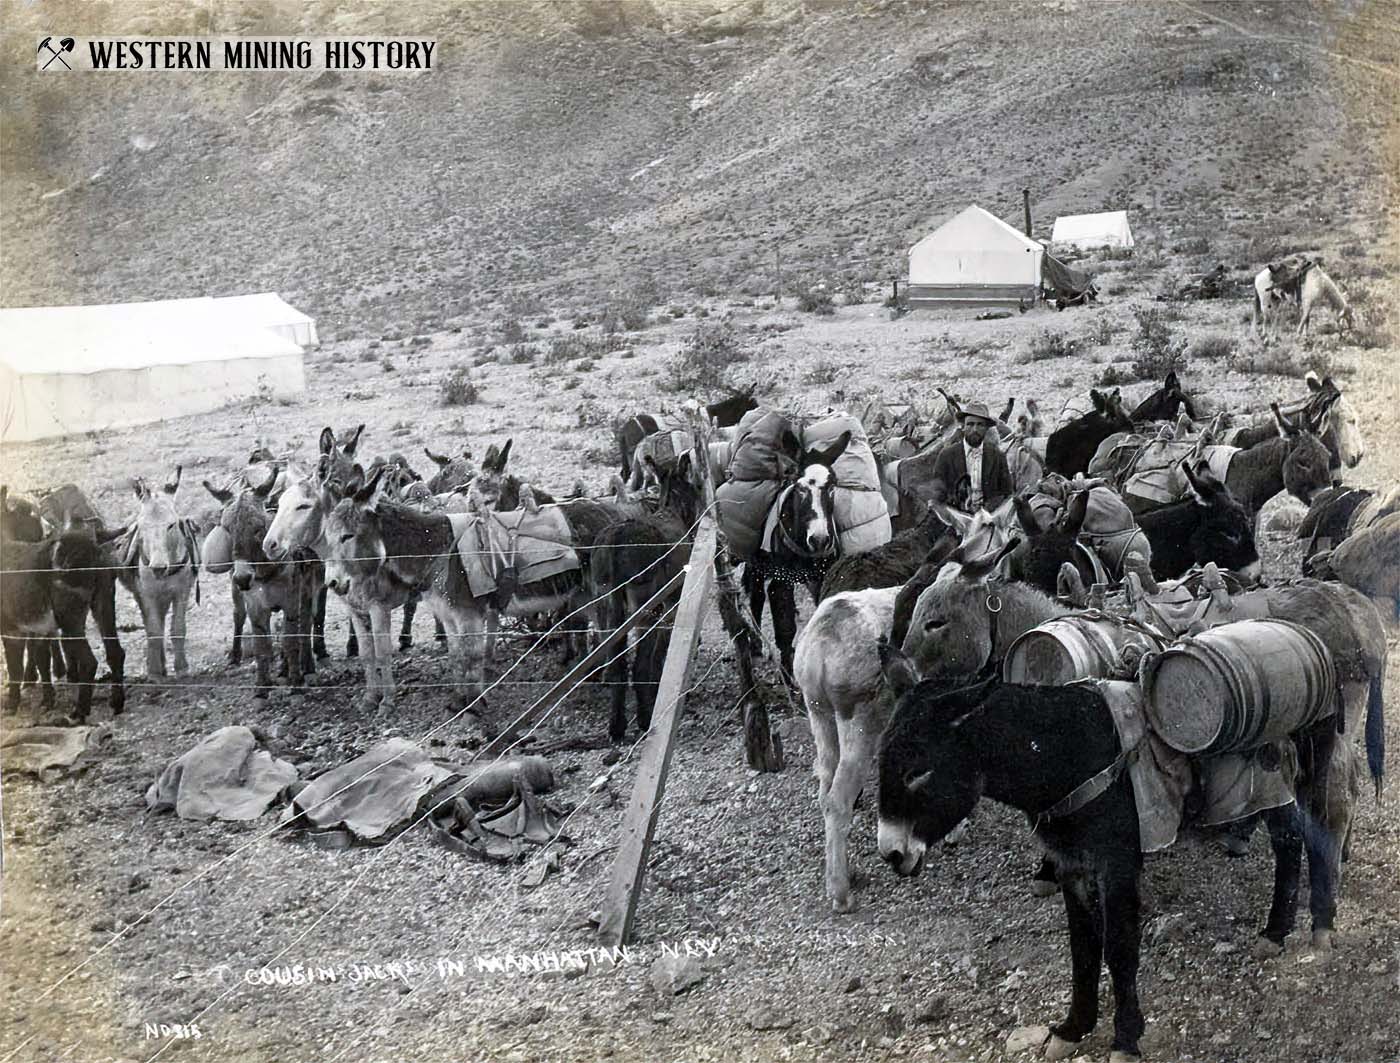 Cousin Jacks and pack train at Manhattan, Nevada ca. 1906